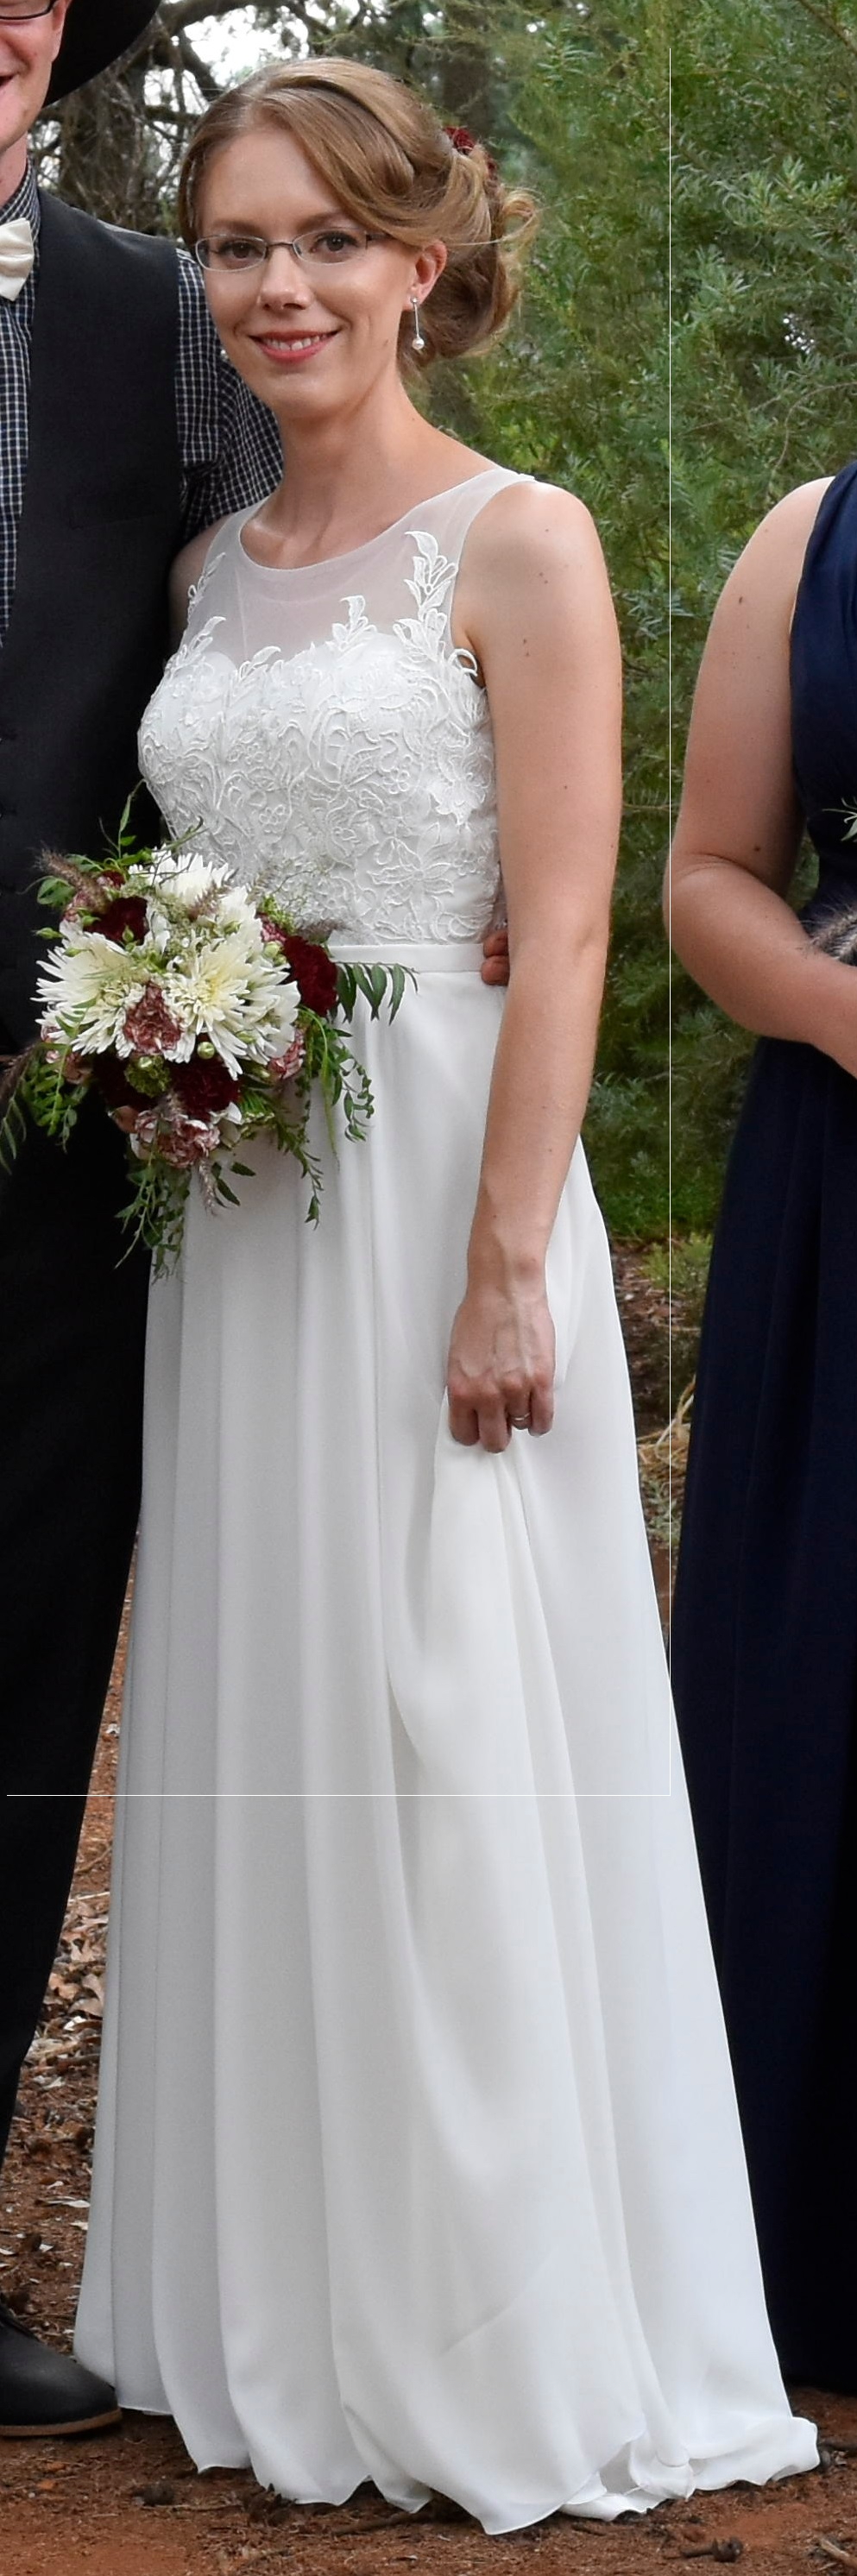 Cizzy Bridal KC0198-02 Second Hand Wedding Dress on Sale